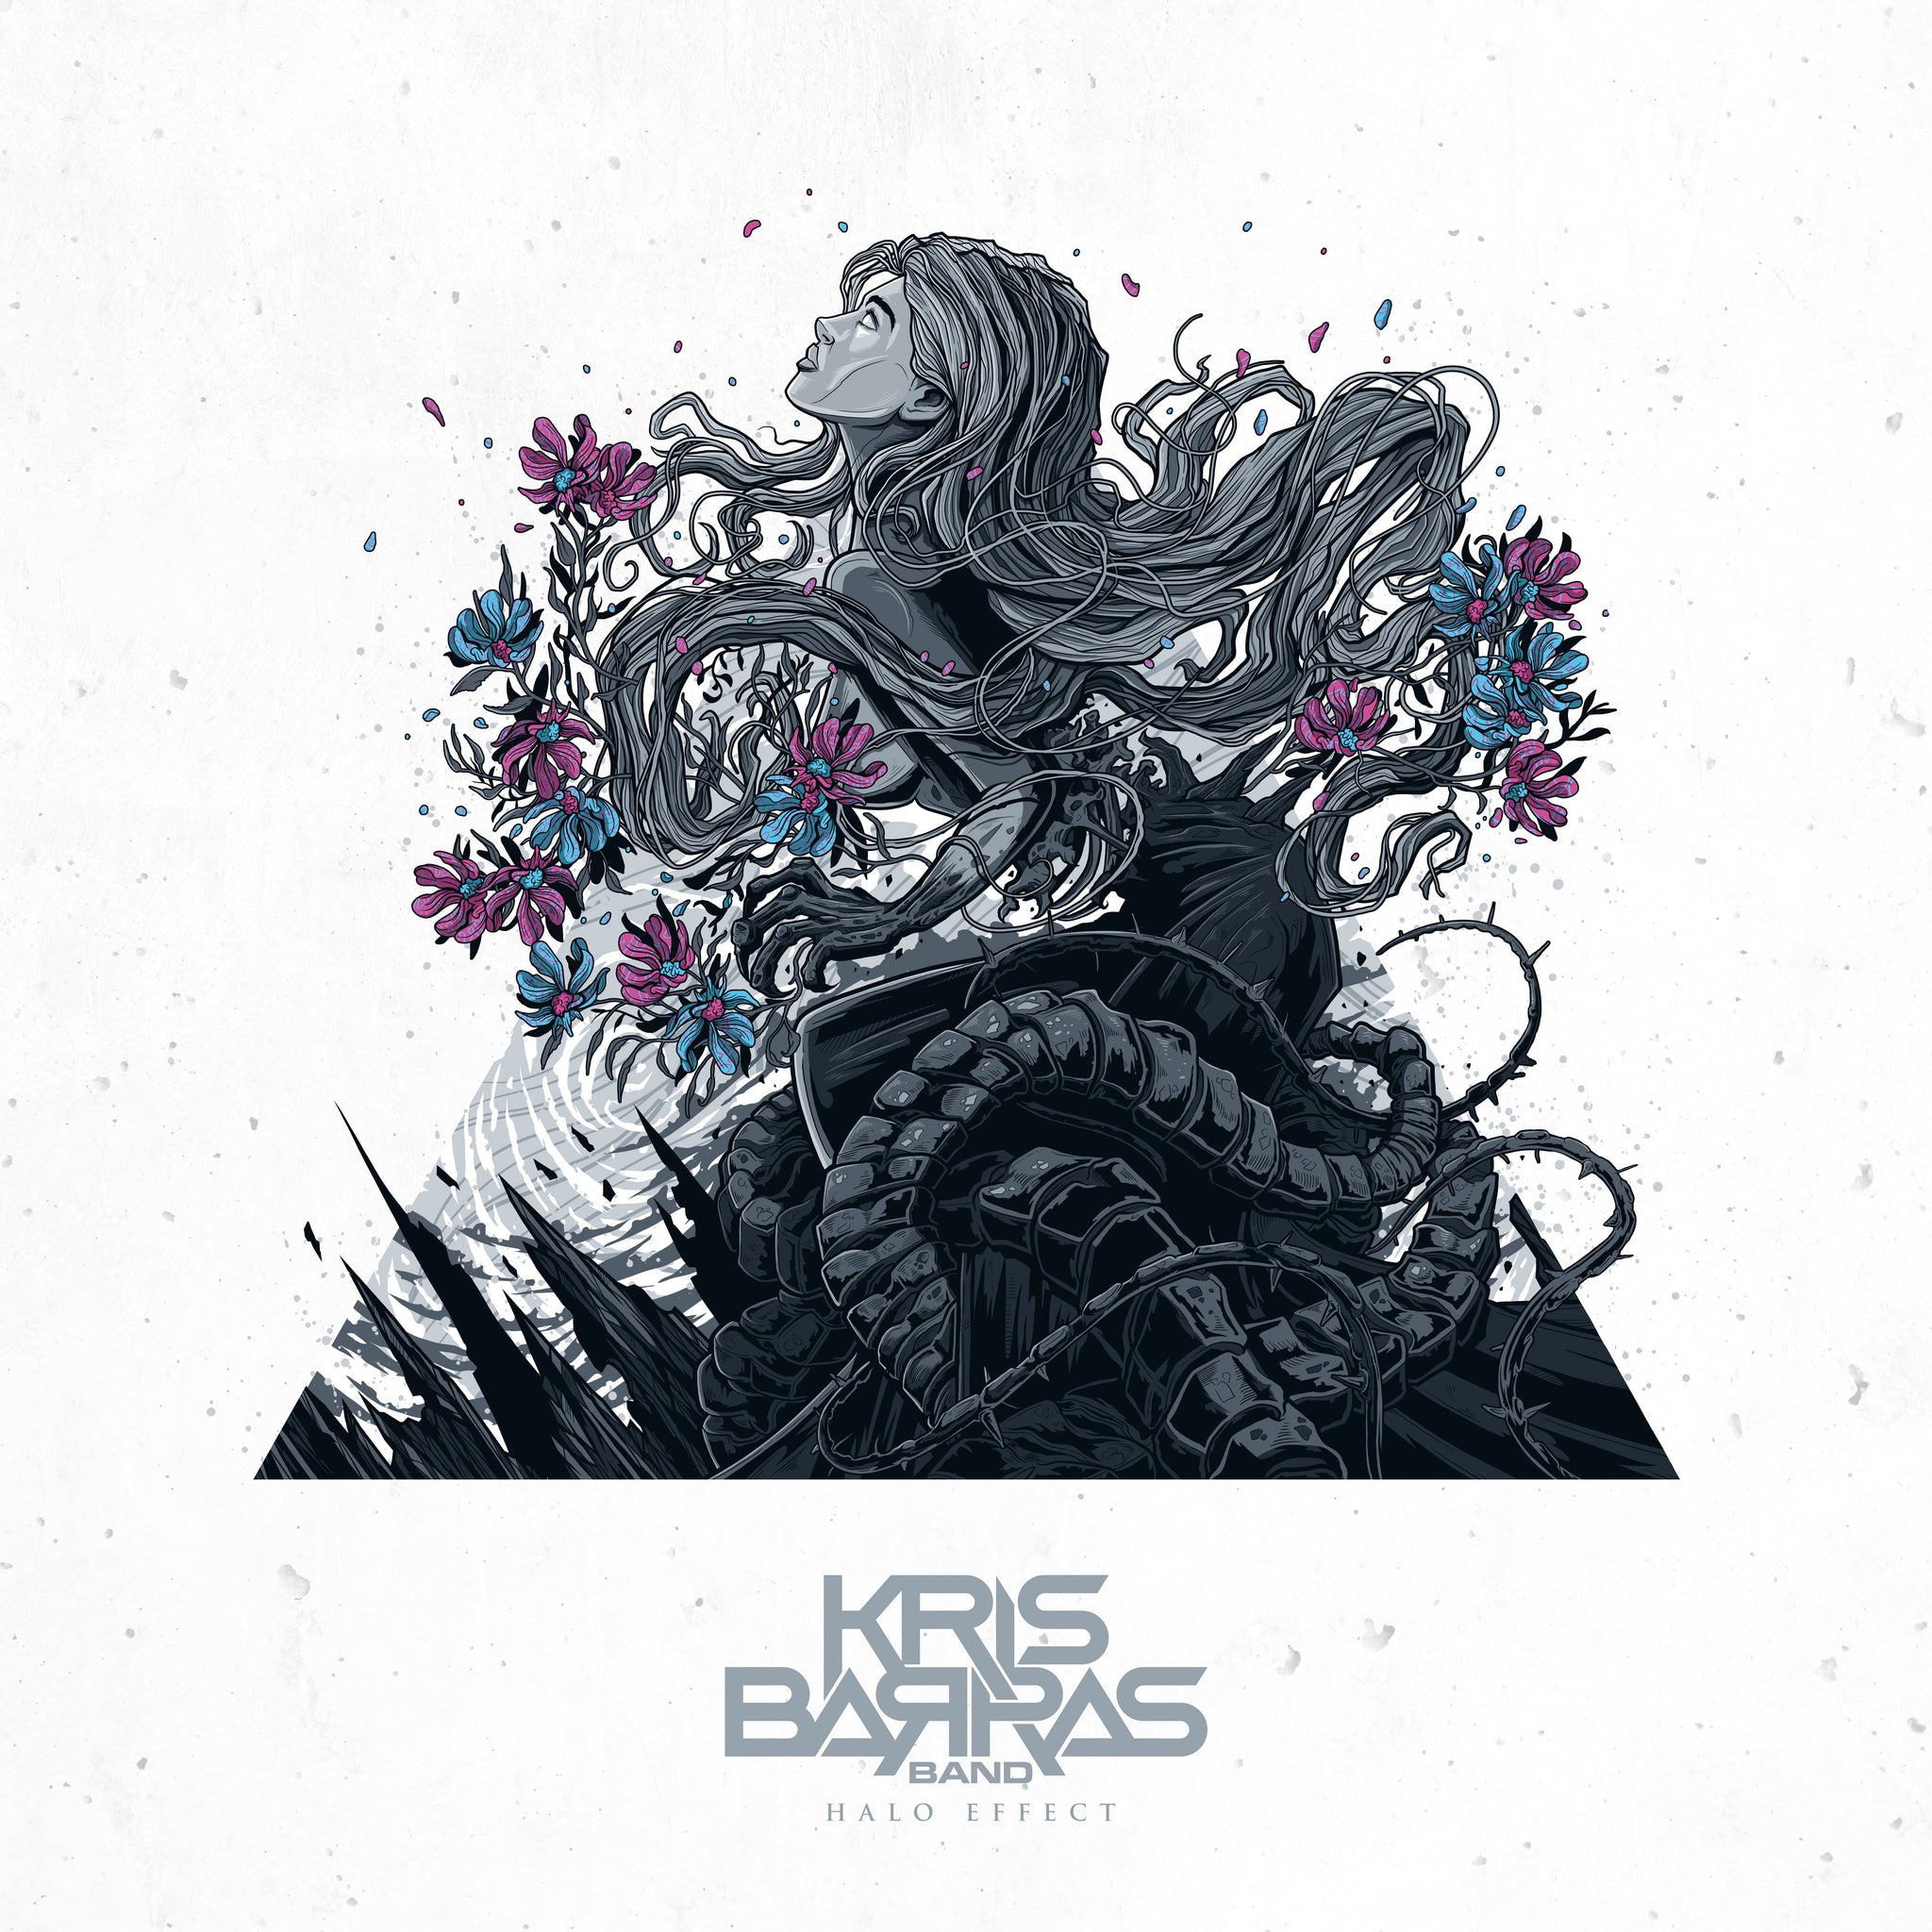 Kris Barras Band "Halo Effect - Piano & Acoustic" Digital Download